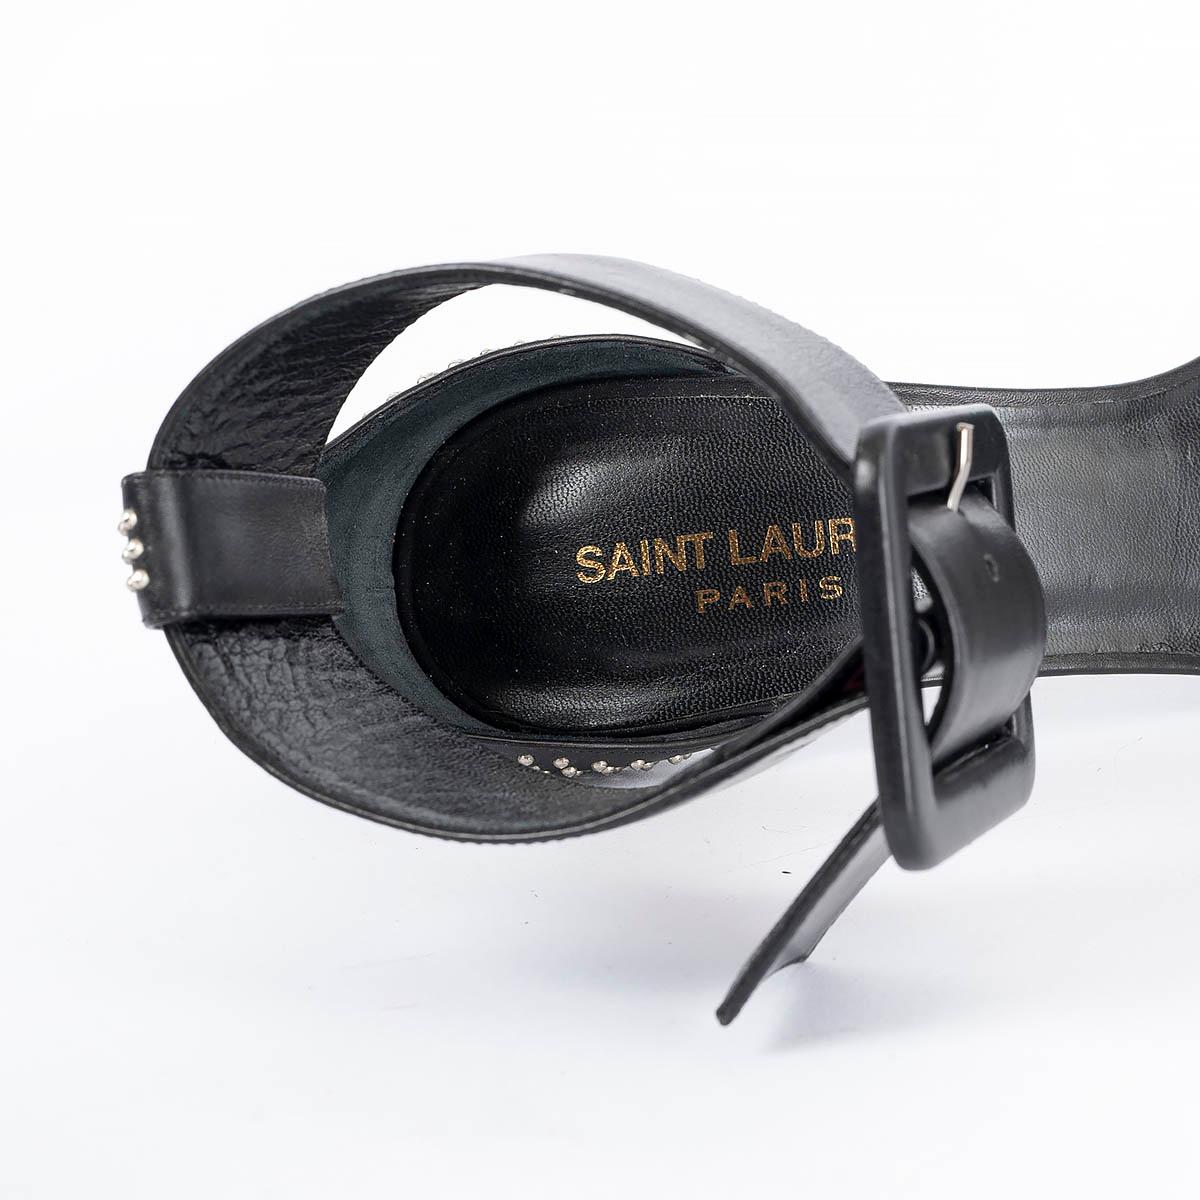 SAINT LAURENT black leather JANE 106 STUDDED Sandals Shoes 38 For Sale 1